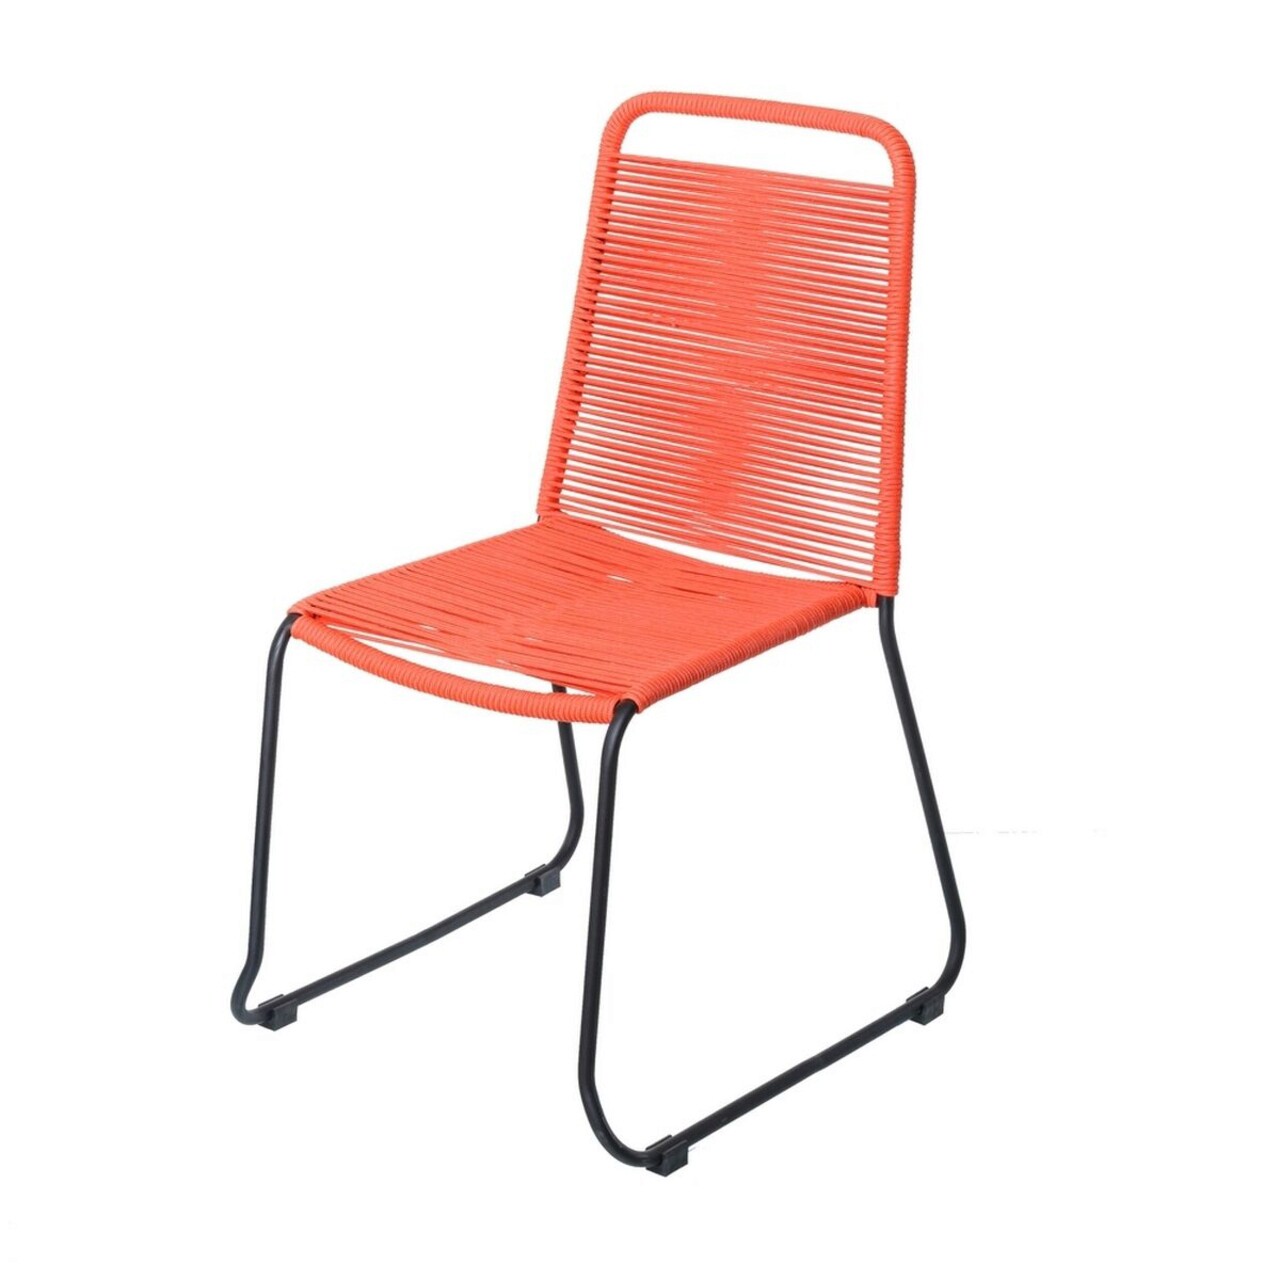 Antea Dark Legs Kerti szék, 53 x 53 x 88 cm, acél/madzag, piros